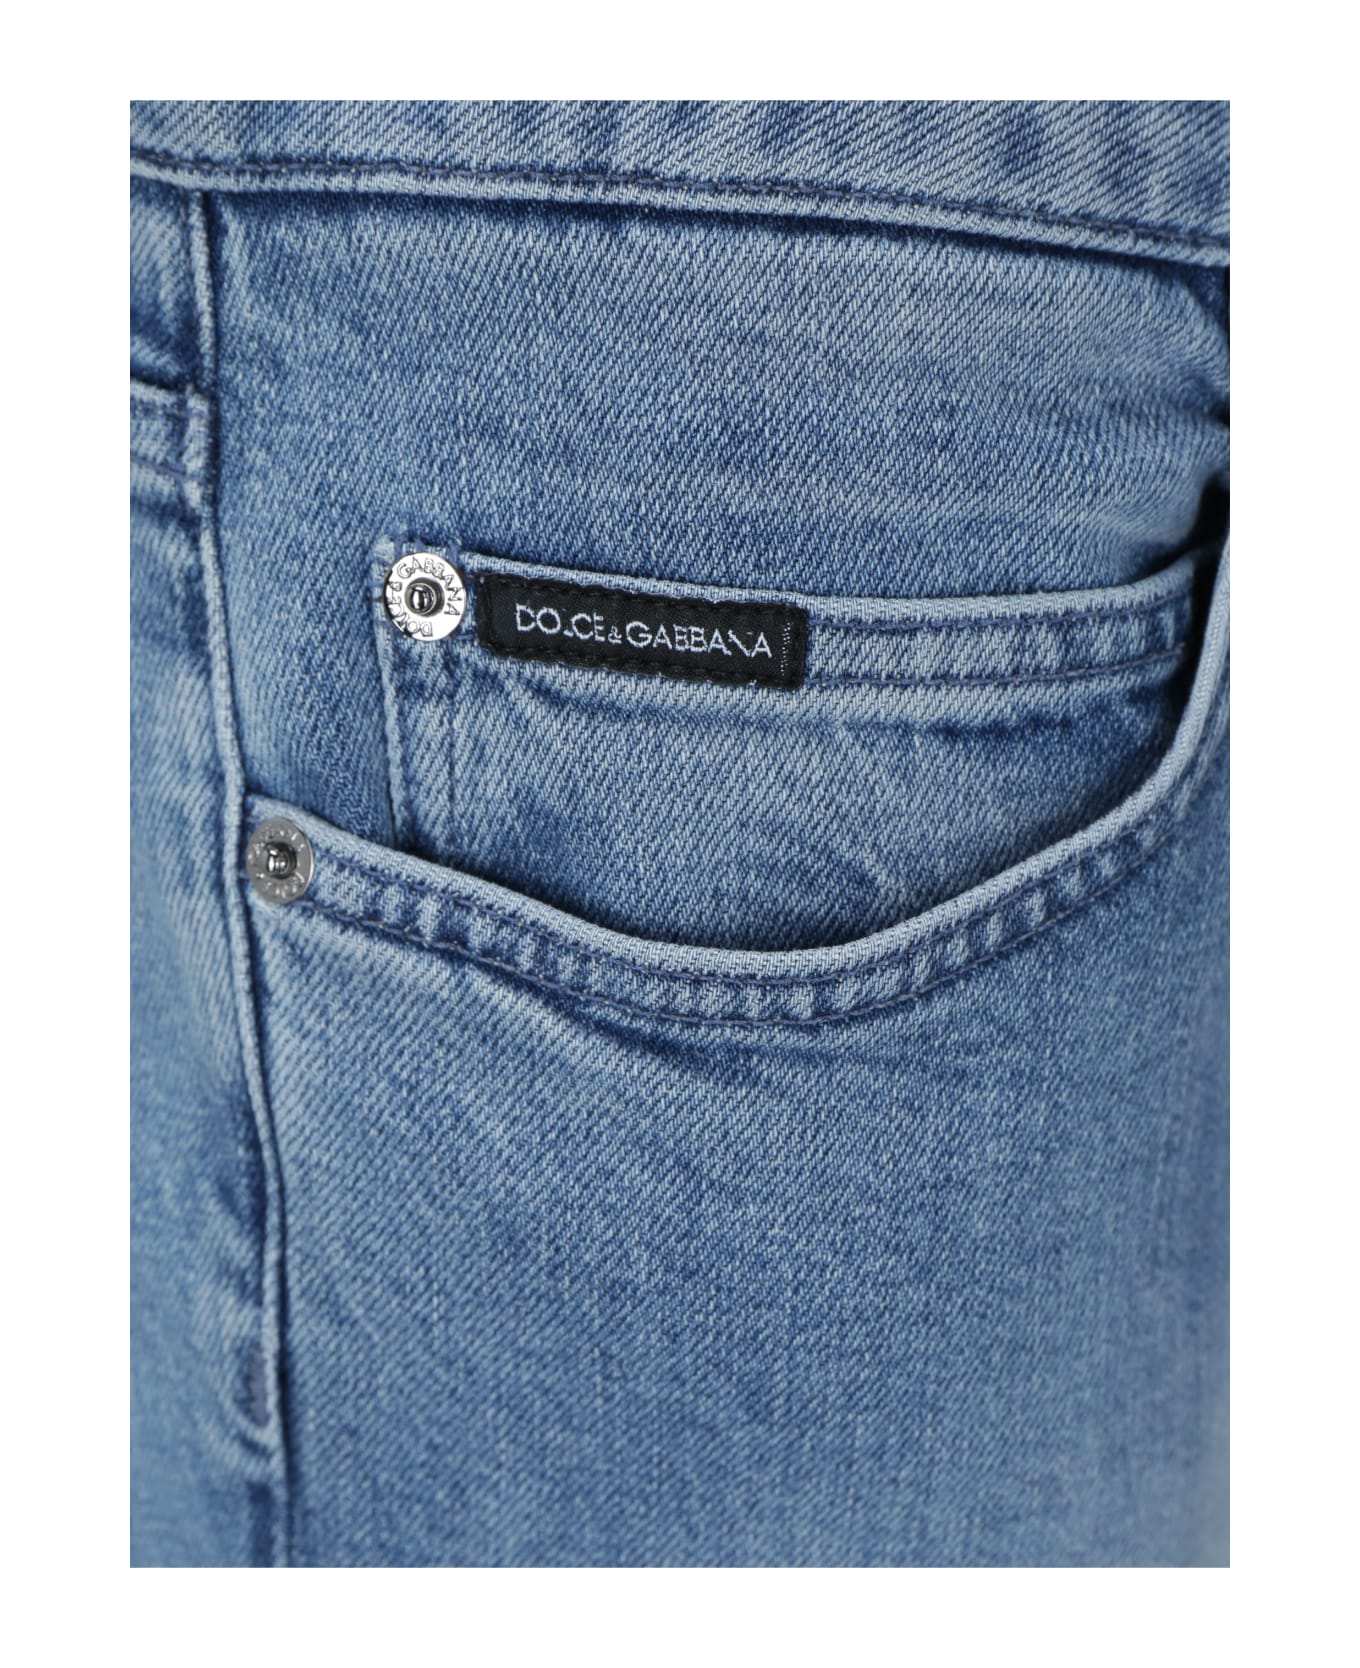 Dolce & Gabbana Denim Jeans - Denim